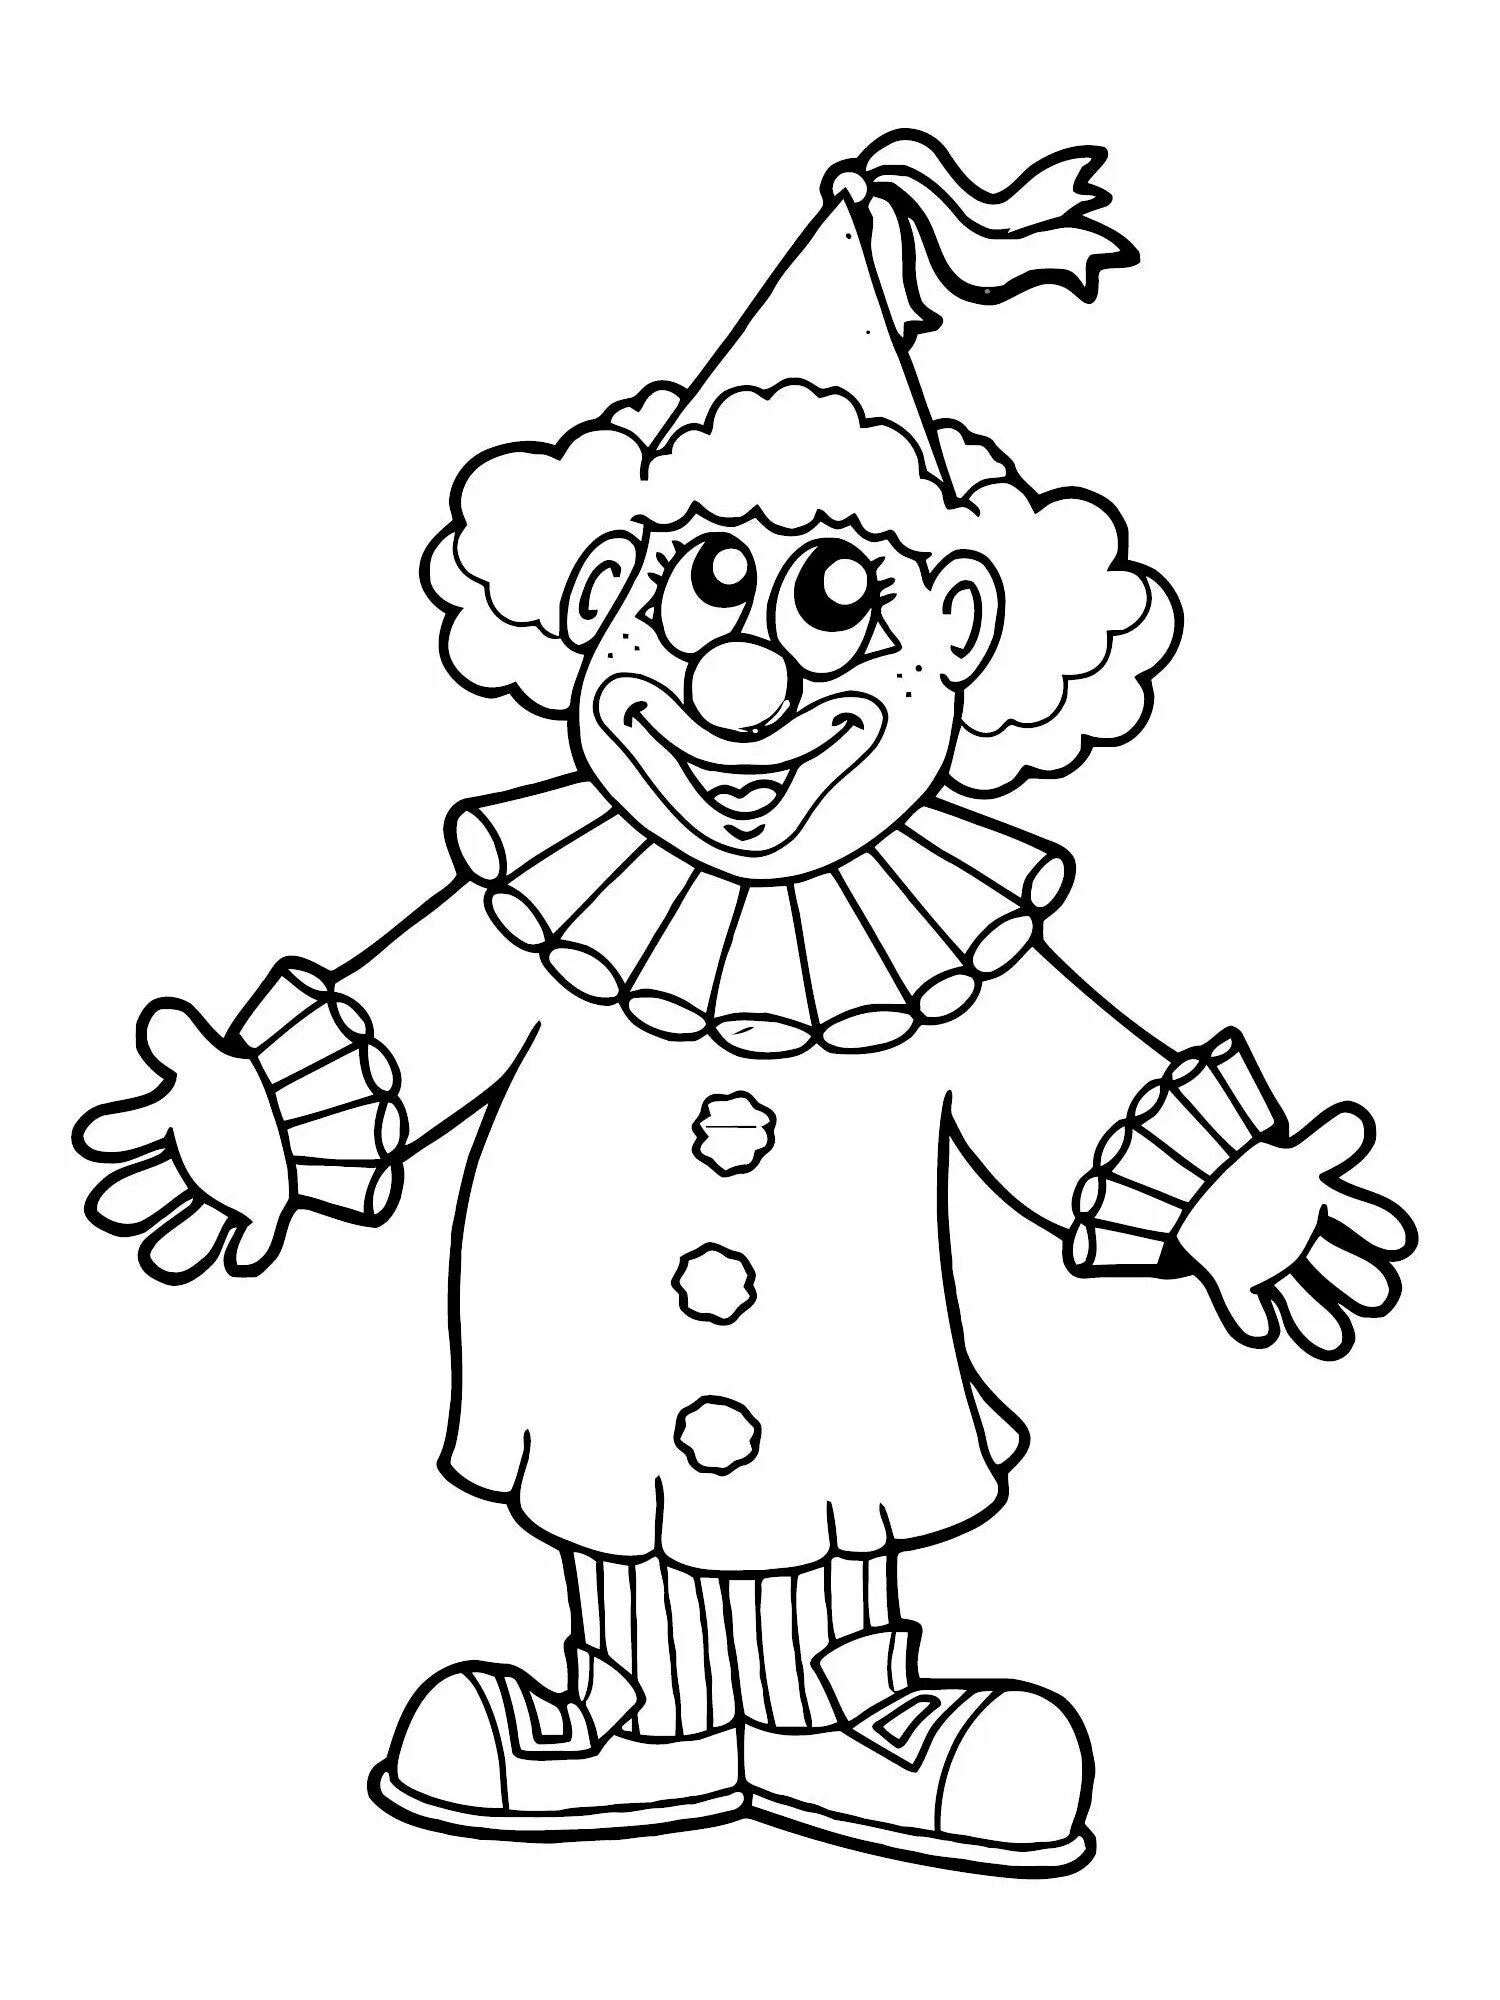 Клоун раскраска для детей 4 5 лет. Клоун раскраска. Клоуны для детей. Клоун раскраска для детей. Клоун картинка.